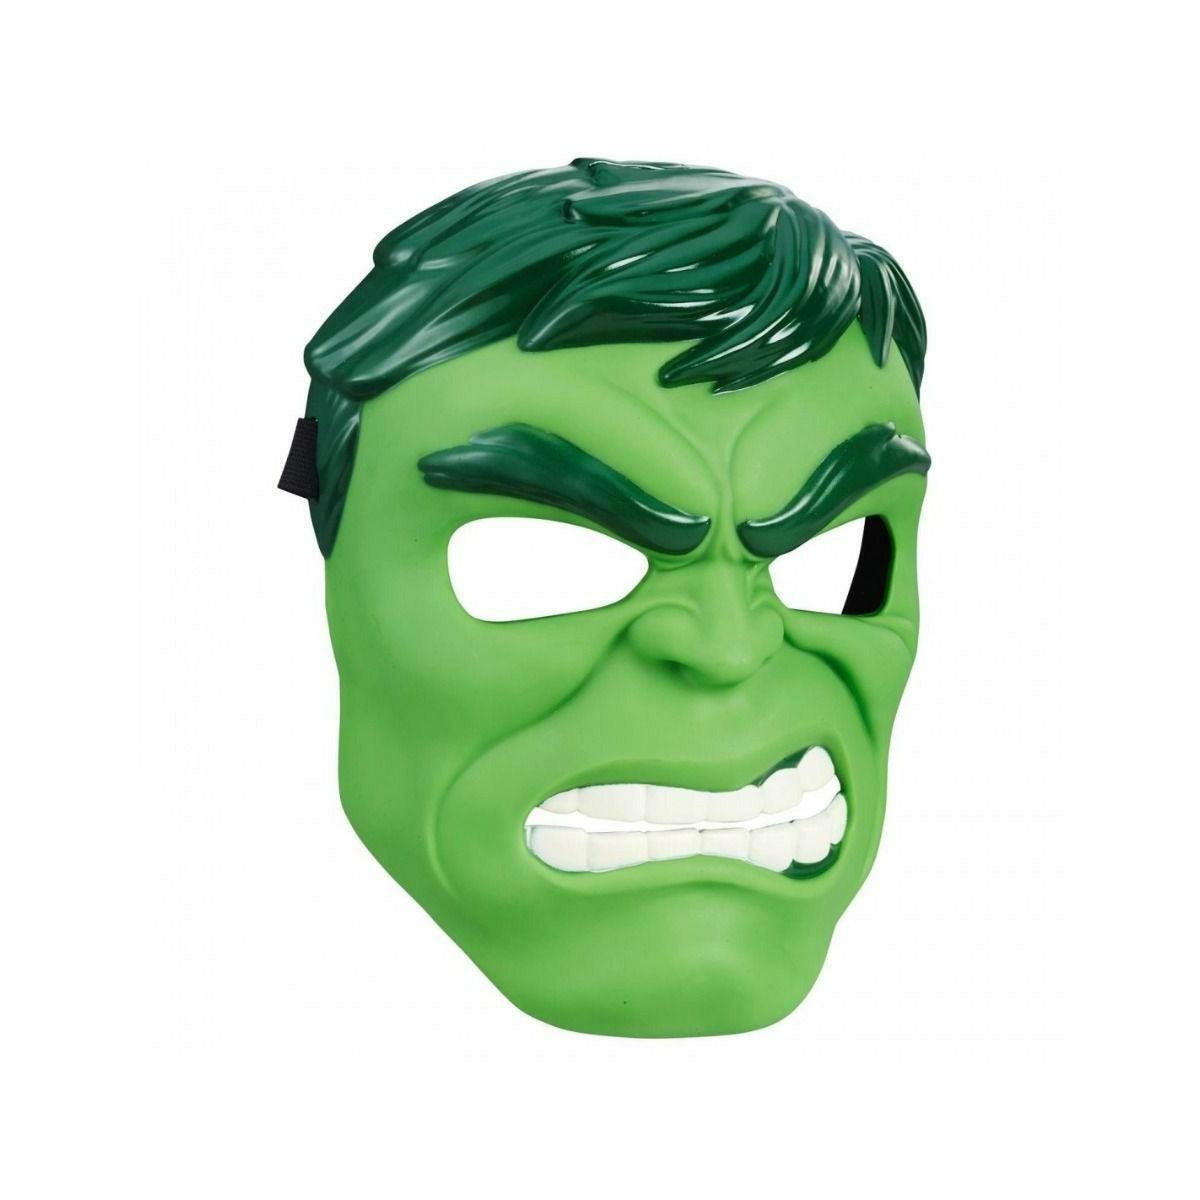 Hasbro Marvel Avengers Hulk Basic Mask - BumbleToys - 5-7 Years, Boys, Dress Up Accessories, Eagle Plus, Hulk, Marvel